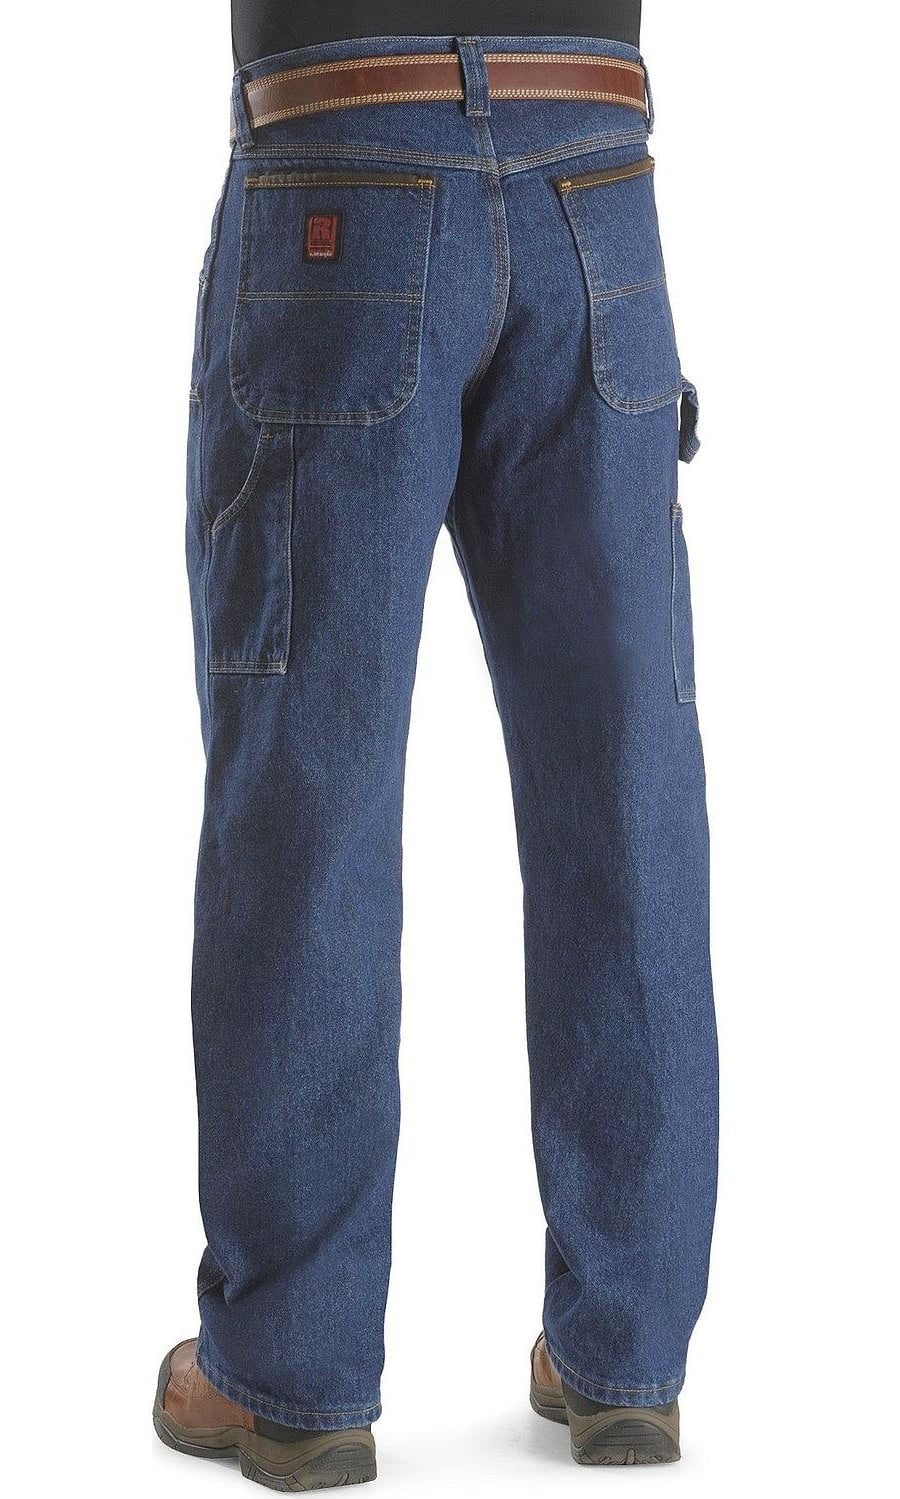 Wrangler Riggs Workwear Utility Jeans, Antique Indigo - 34 x 34 ...